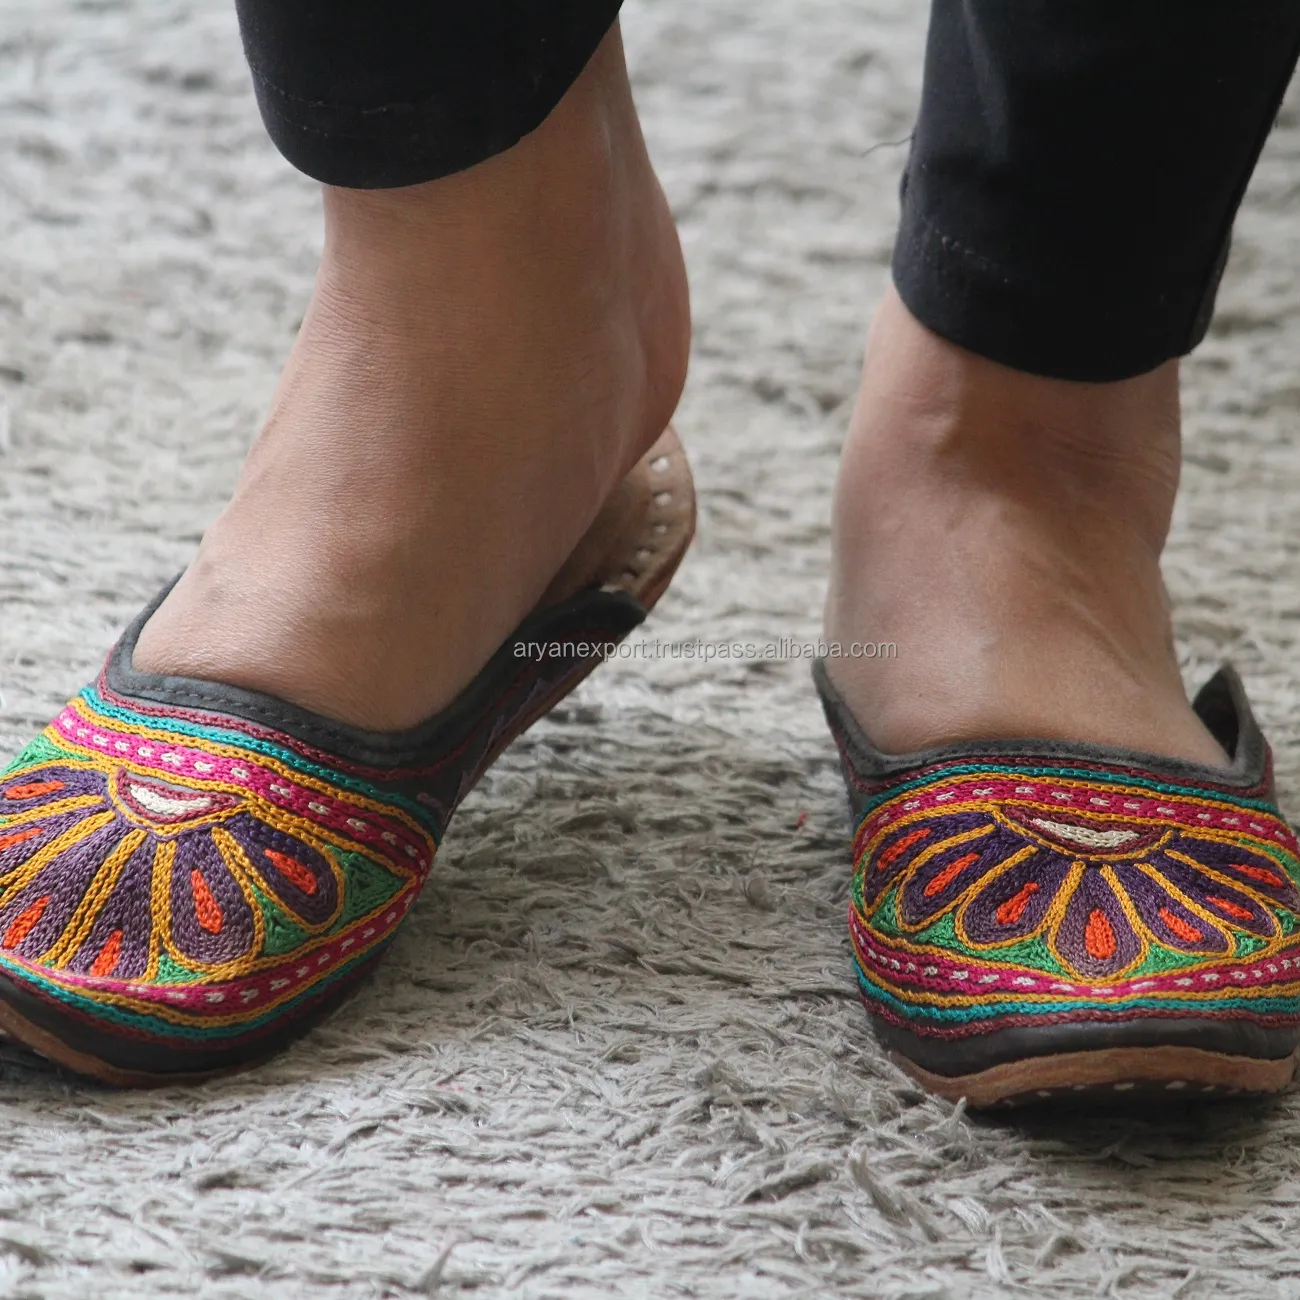 Sapato de noiva de couro genuíno étnico estilo indiano, sapatos de noiva com bordado, sandálias de juts chromesa, planos